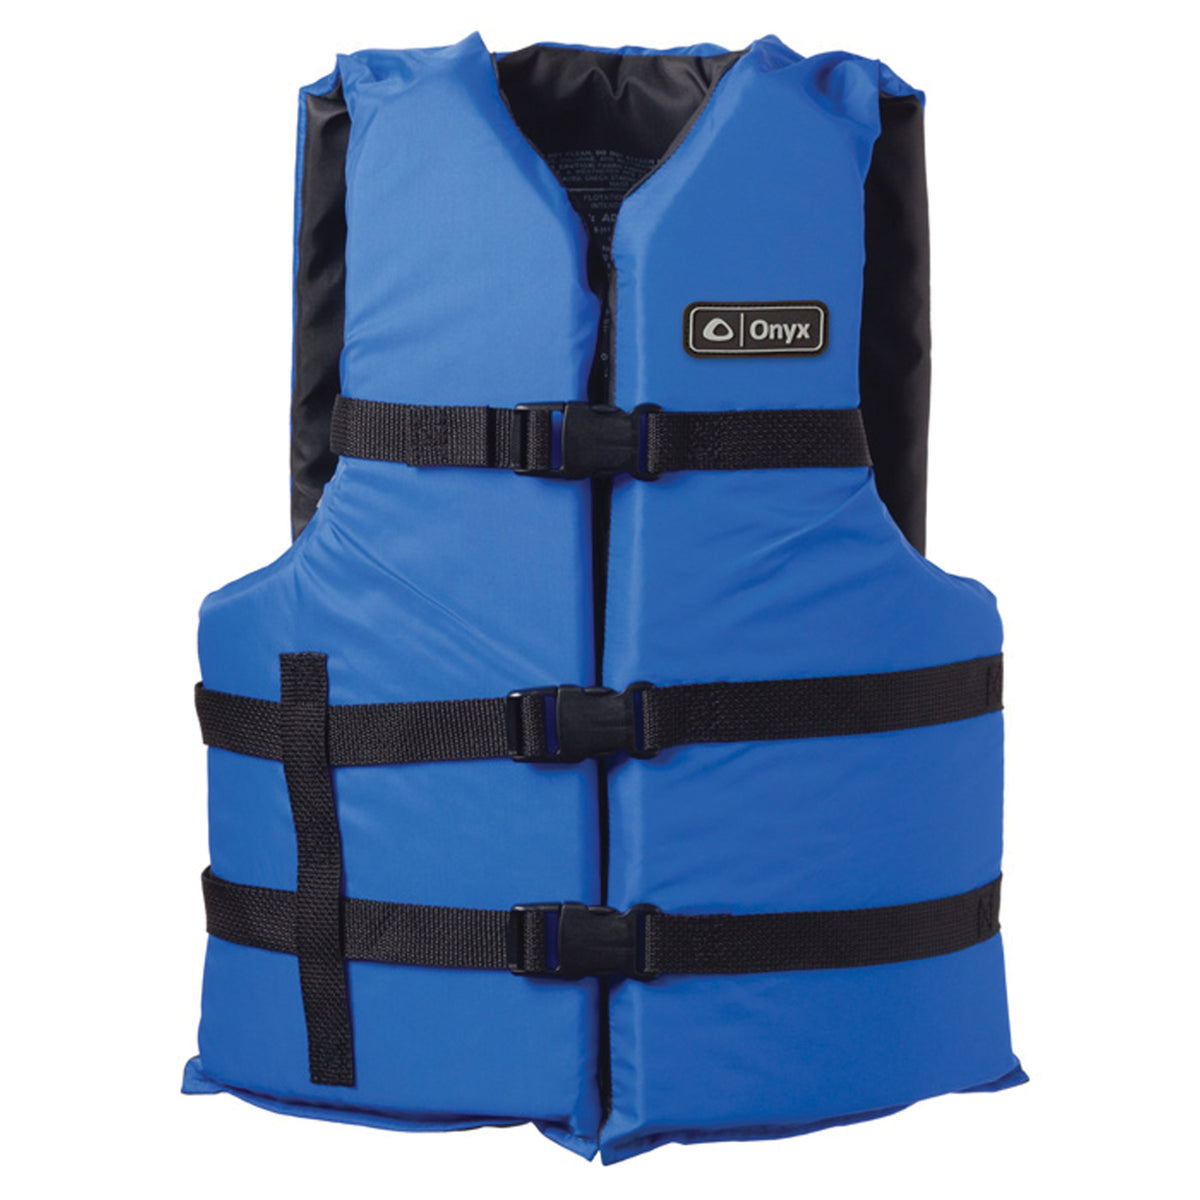 Onyx 103000-500-005-12 General Purpose Vests - Adult 2XL/4XL, Blue/Black